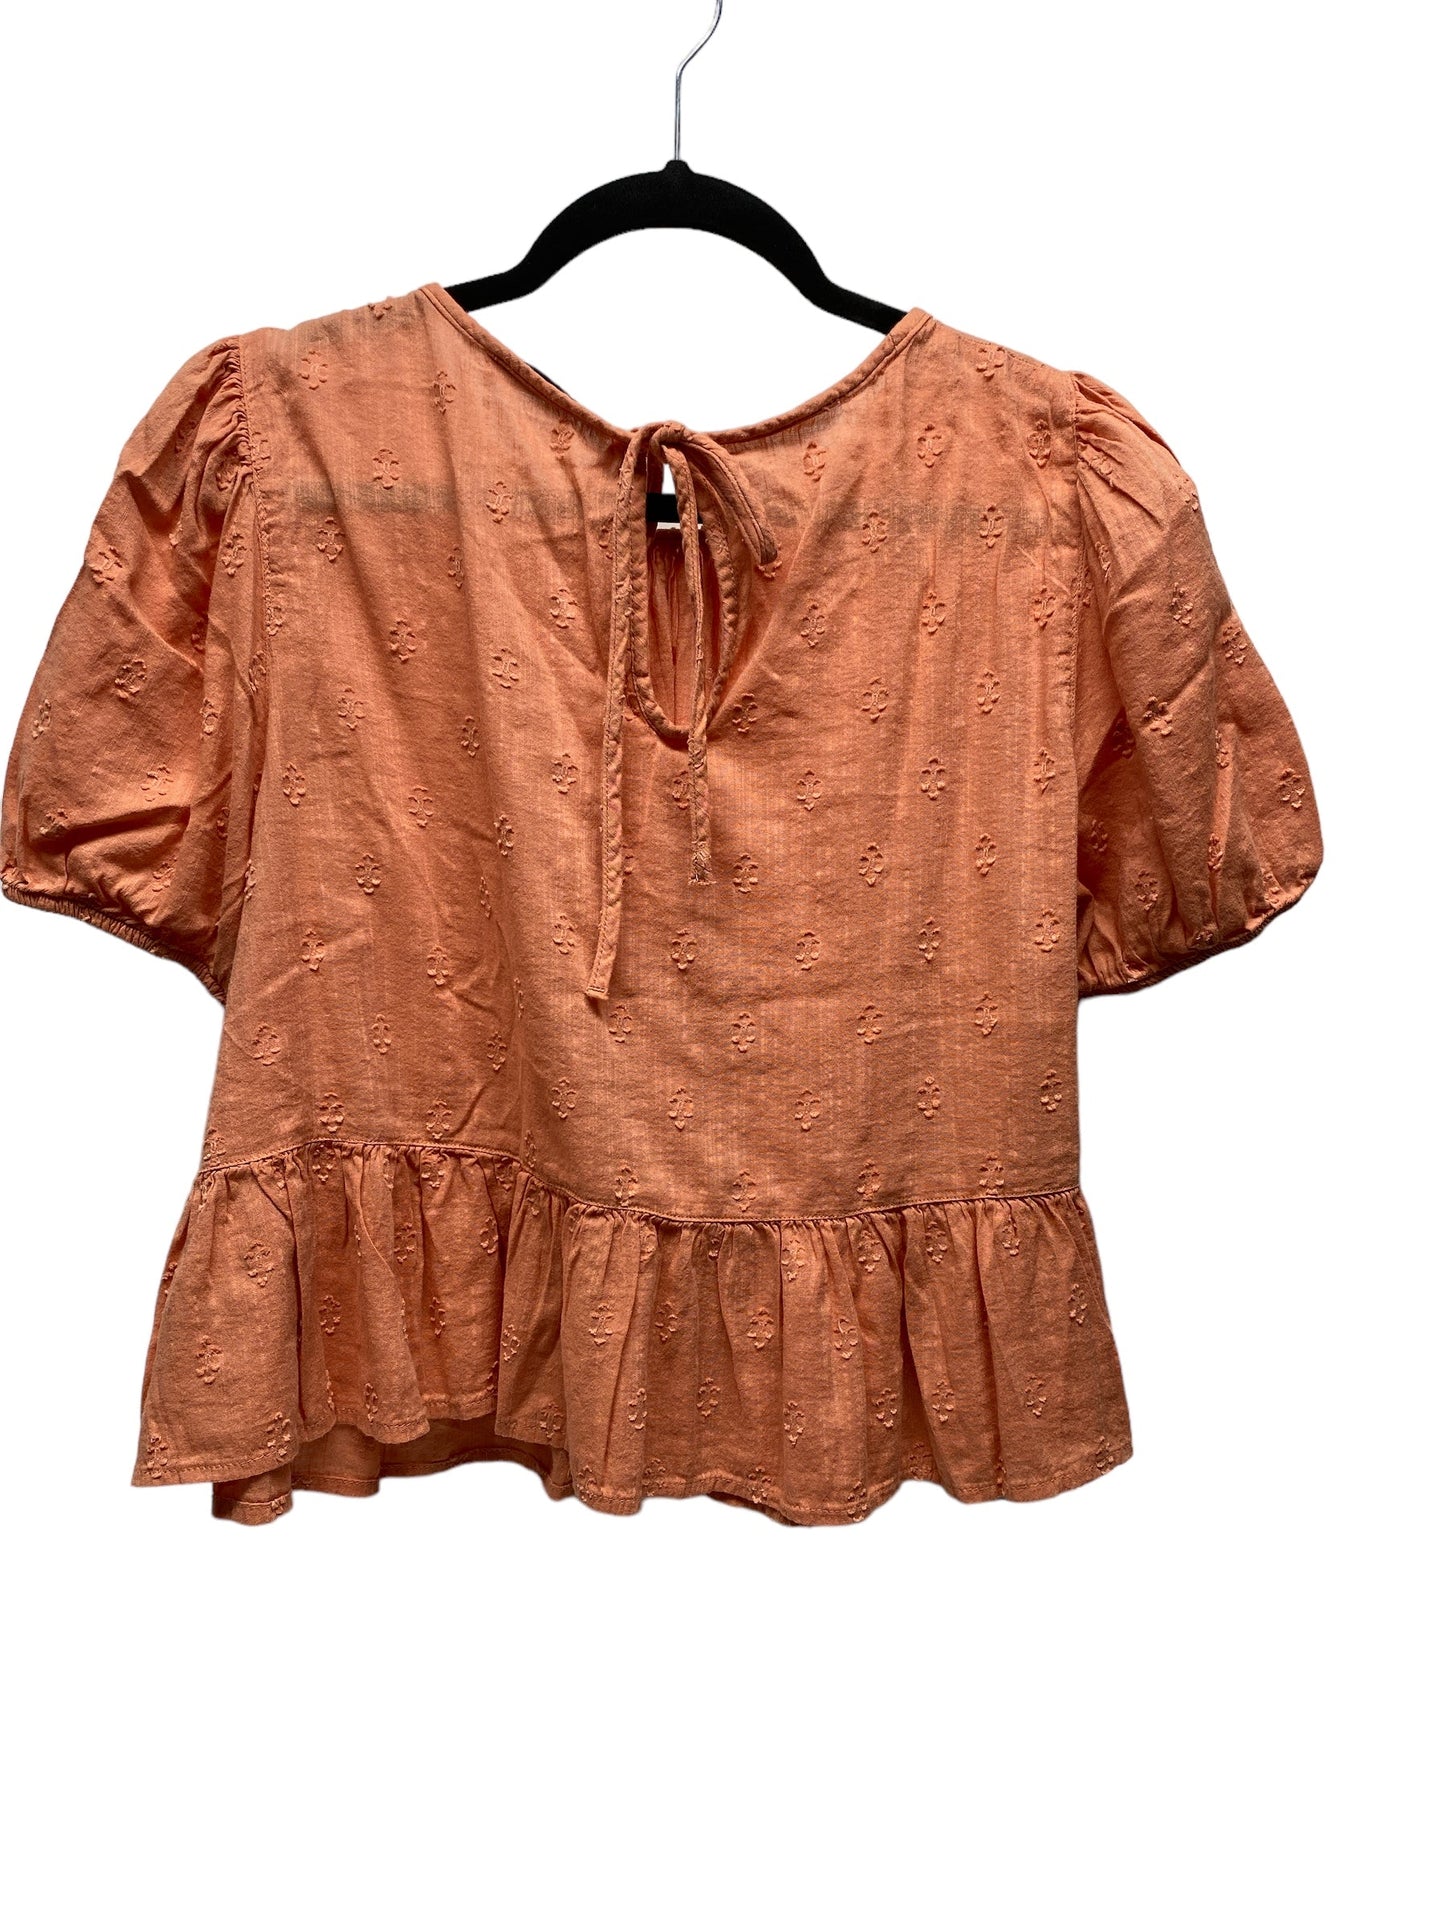 Blouse Short Sleeve By Arizona  Size: Xl